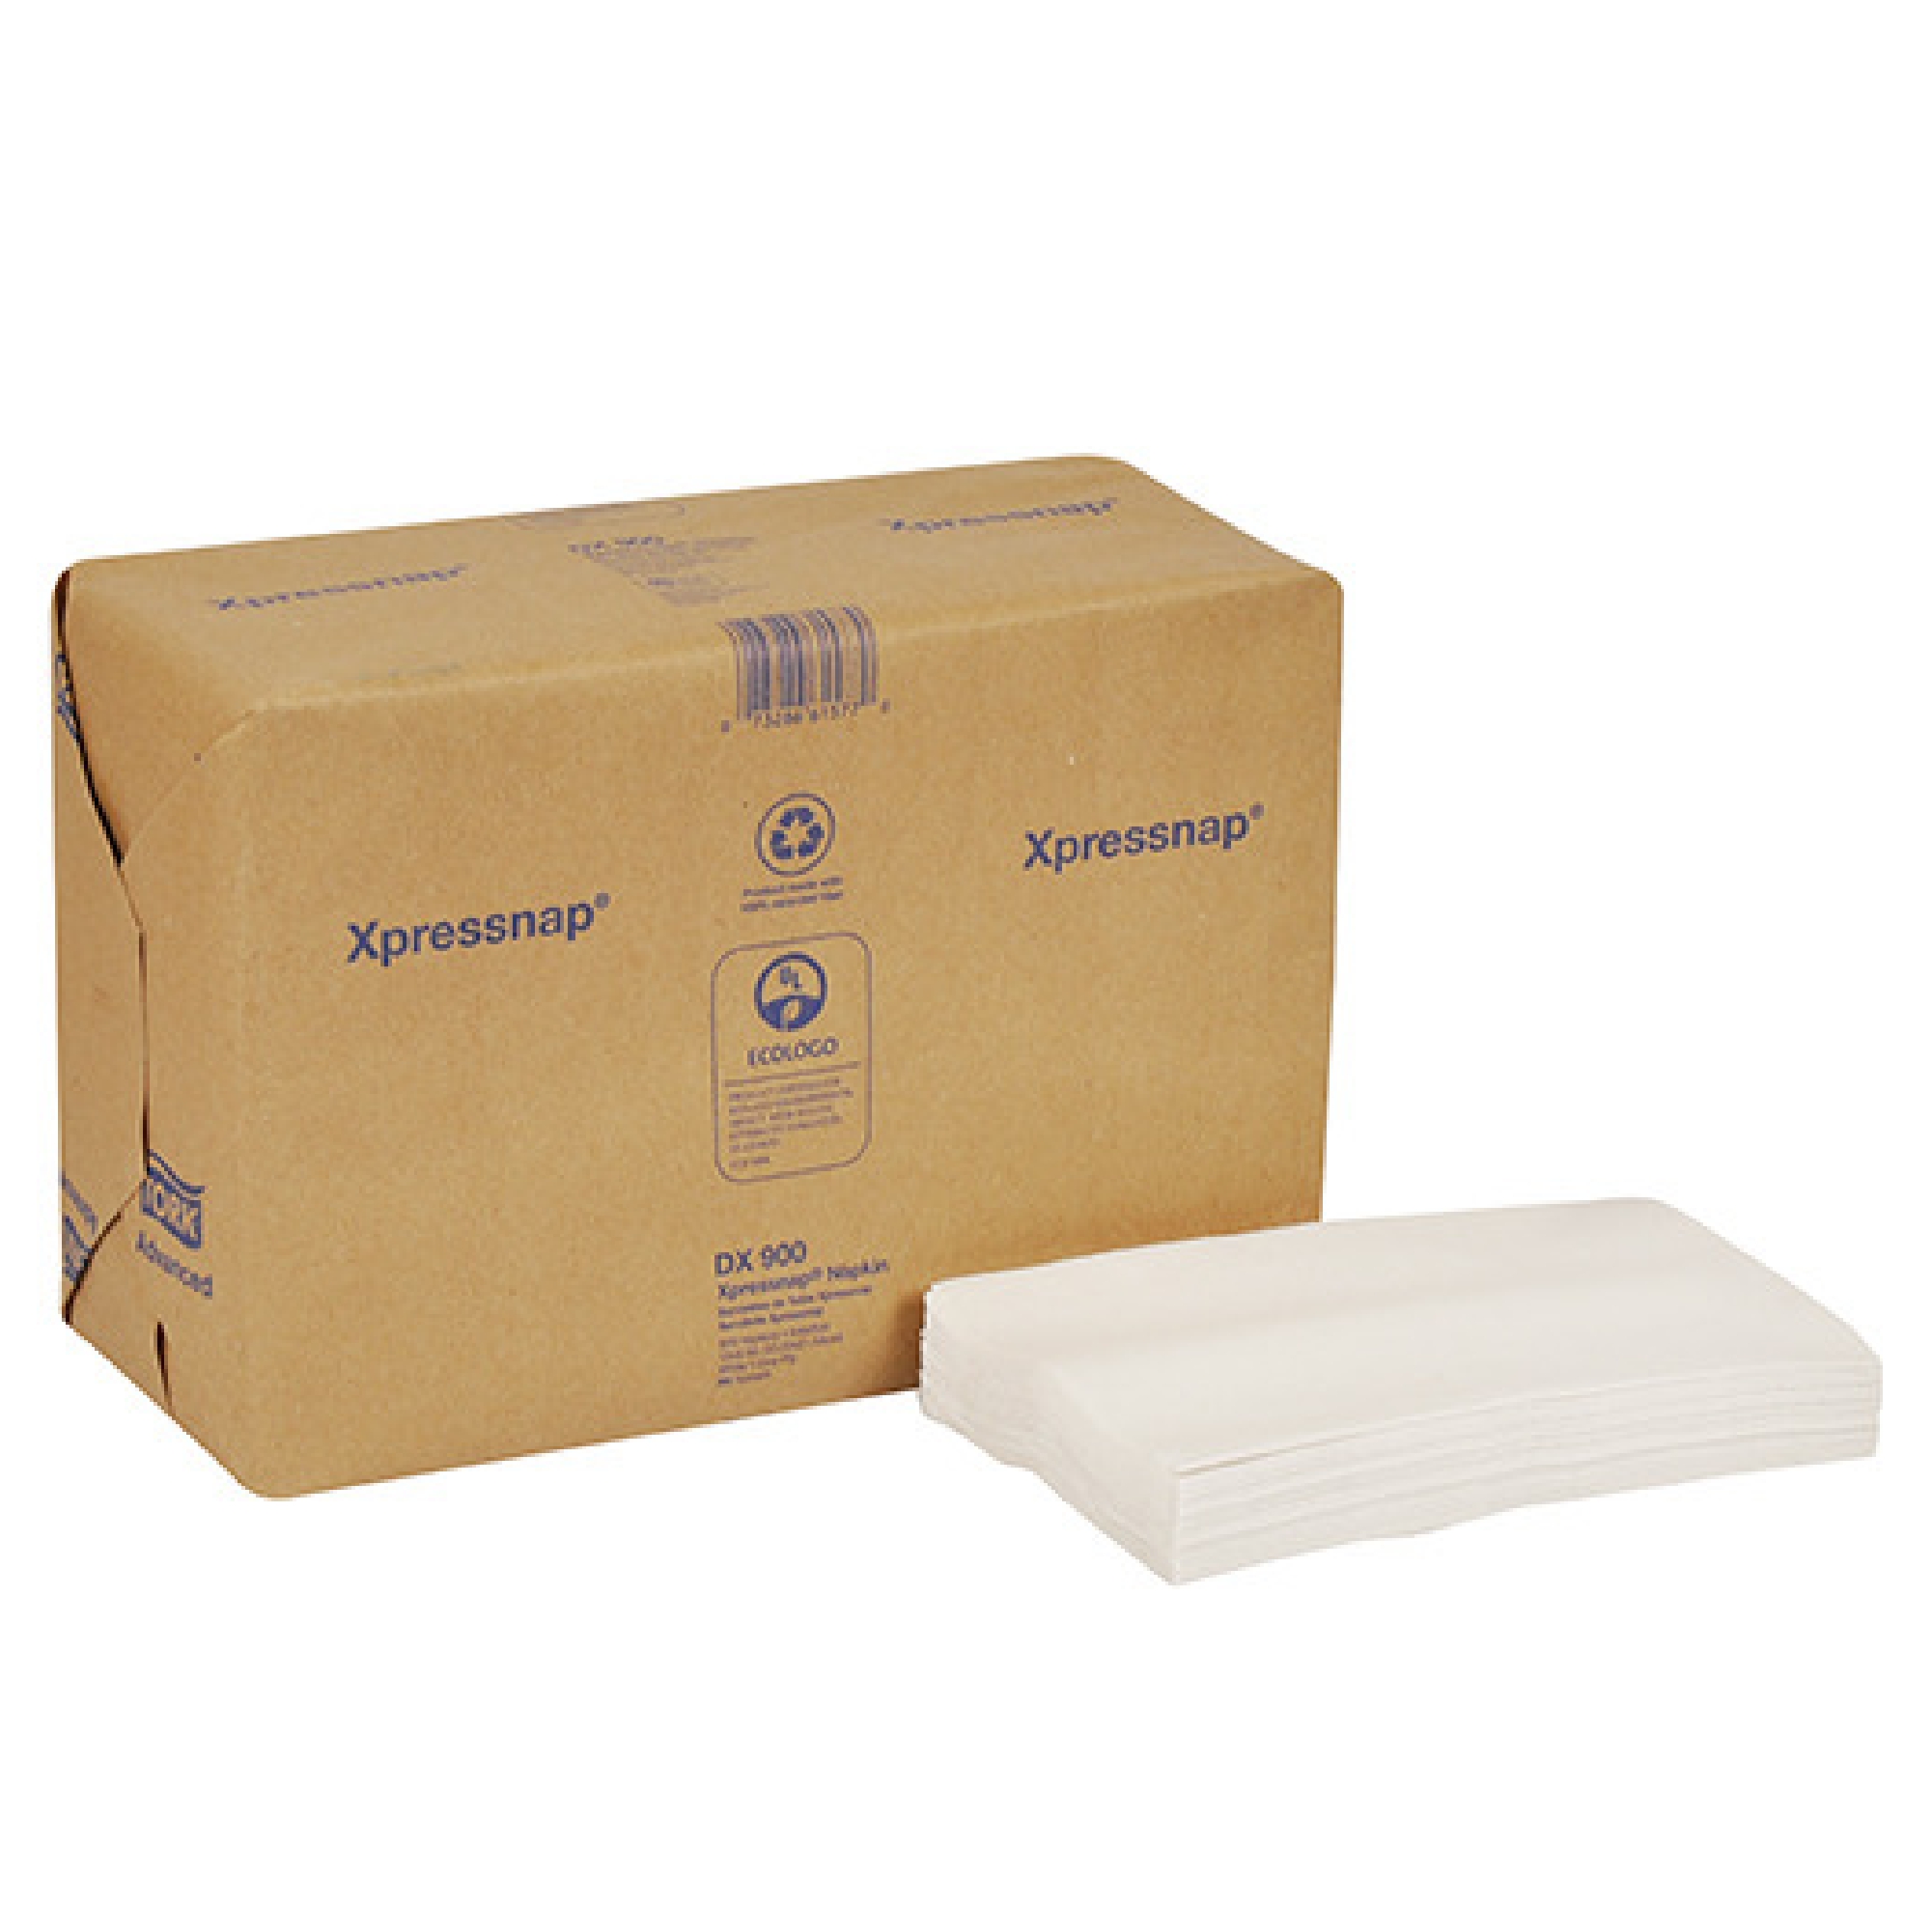 Tork 701342 servilleta Advanced Xpressnap color blanca 25 x16, caja con 12 paquetes de 500 hojas cada uno